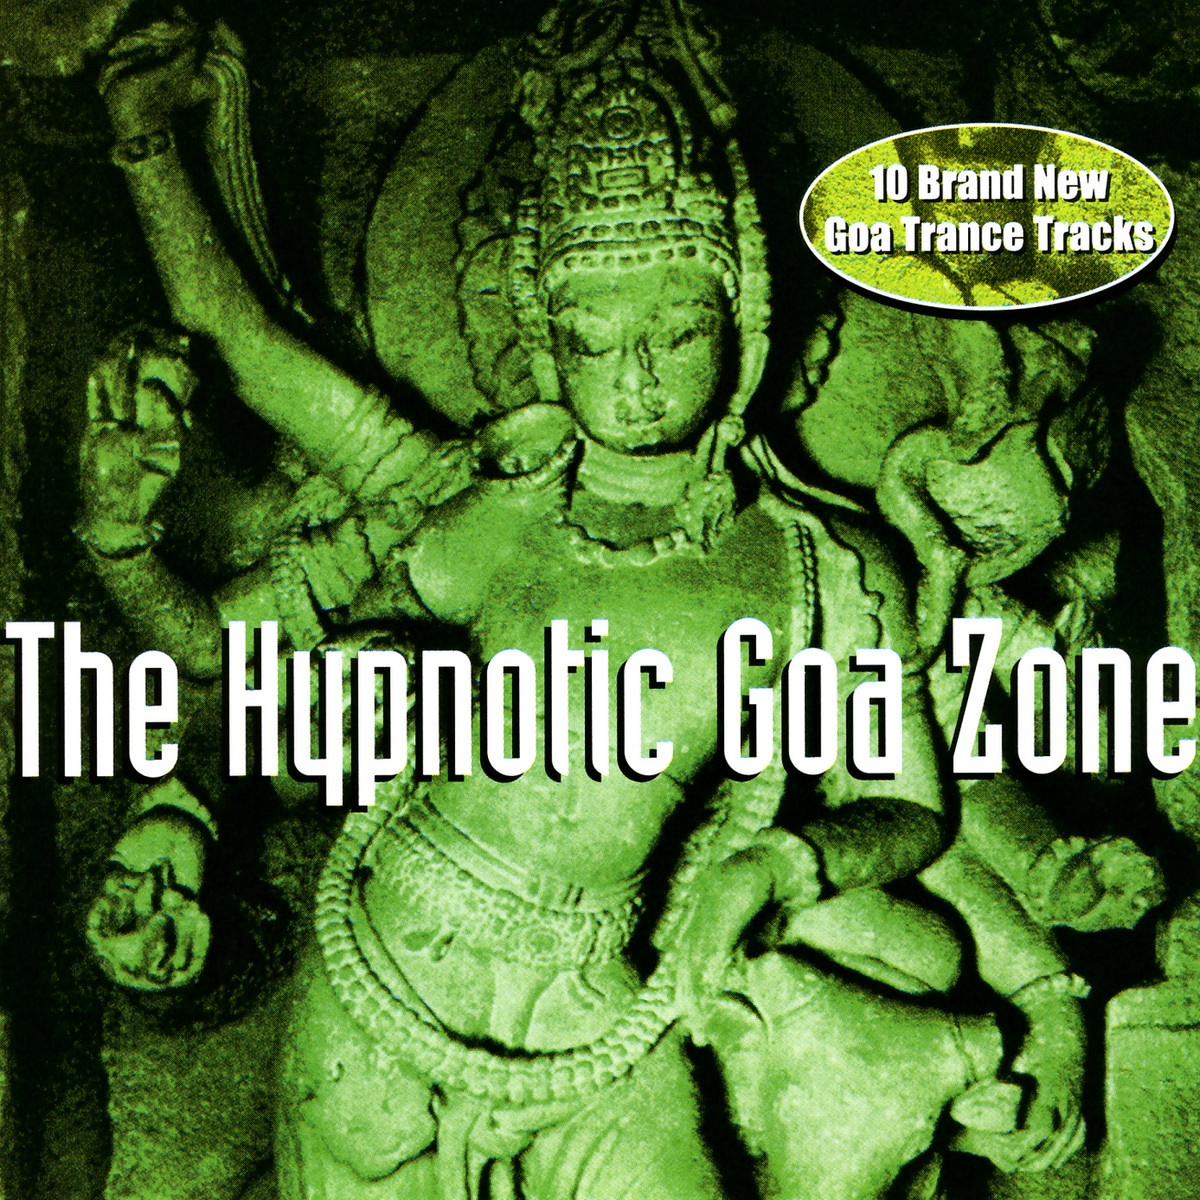 The Hypnotic Goa Zone